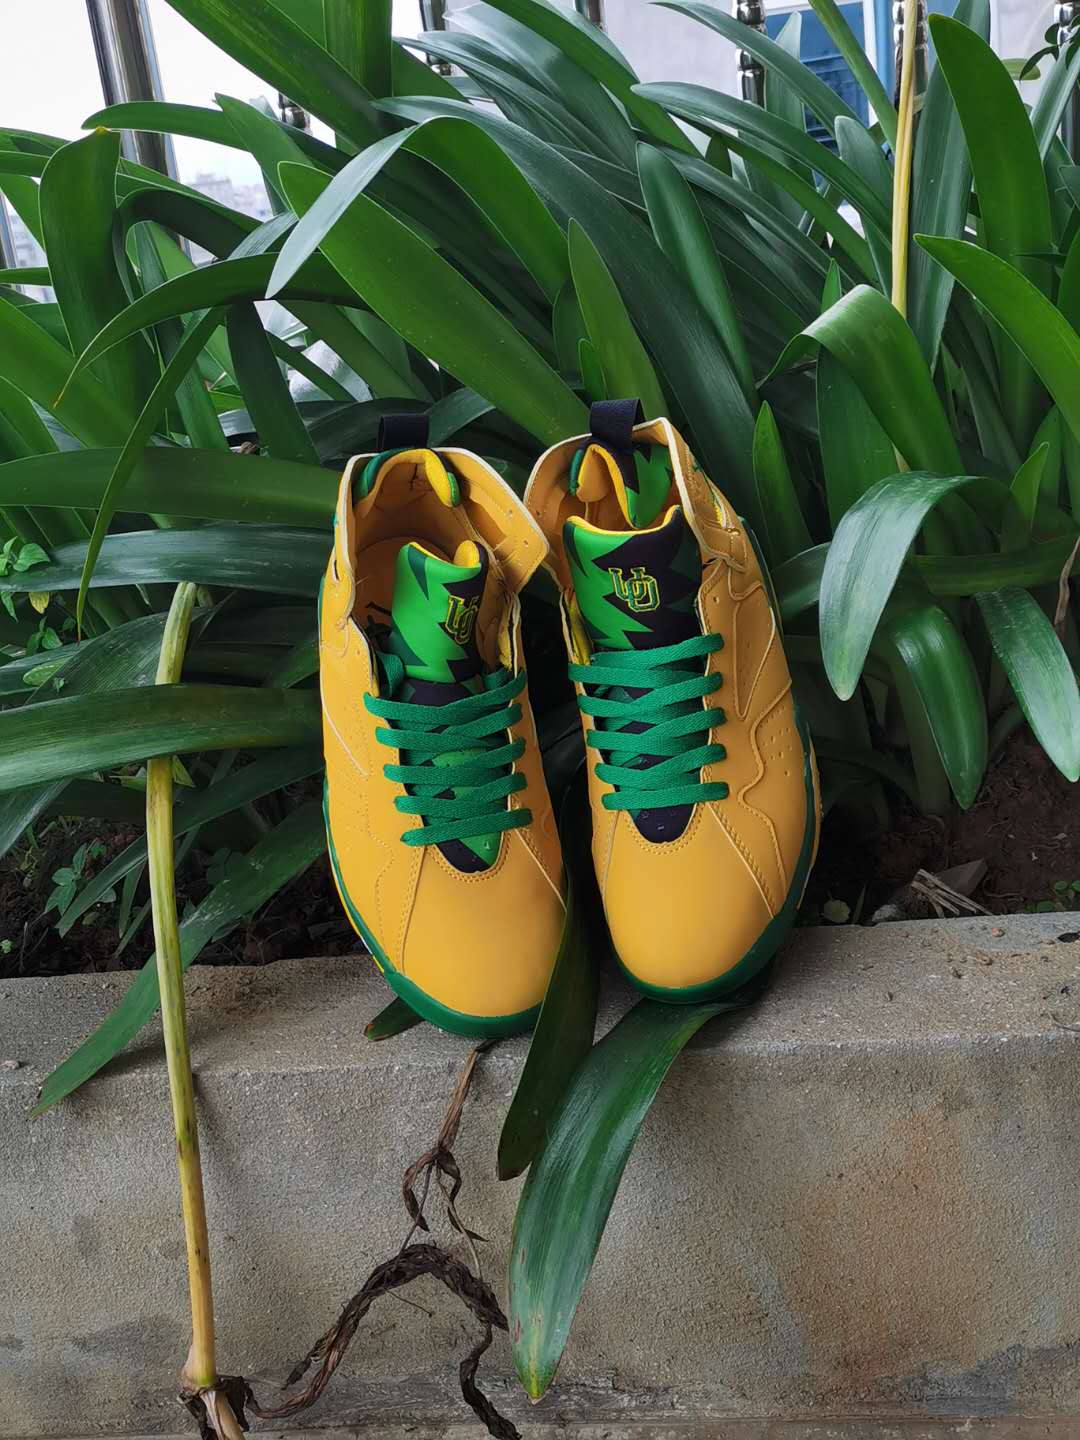 New Air Jordan 7 Retro Ginger Yellow Green Shoes - Click Image to Close